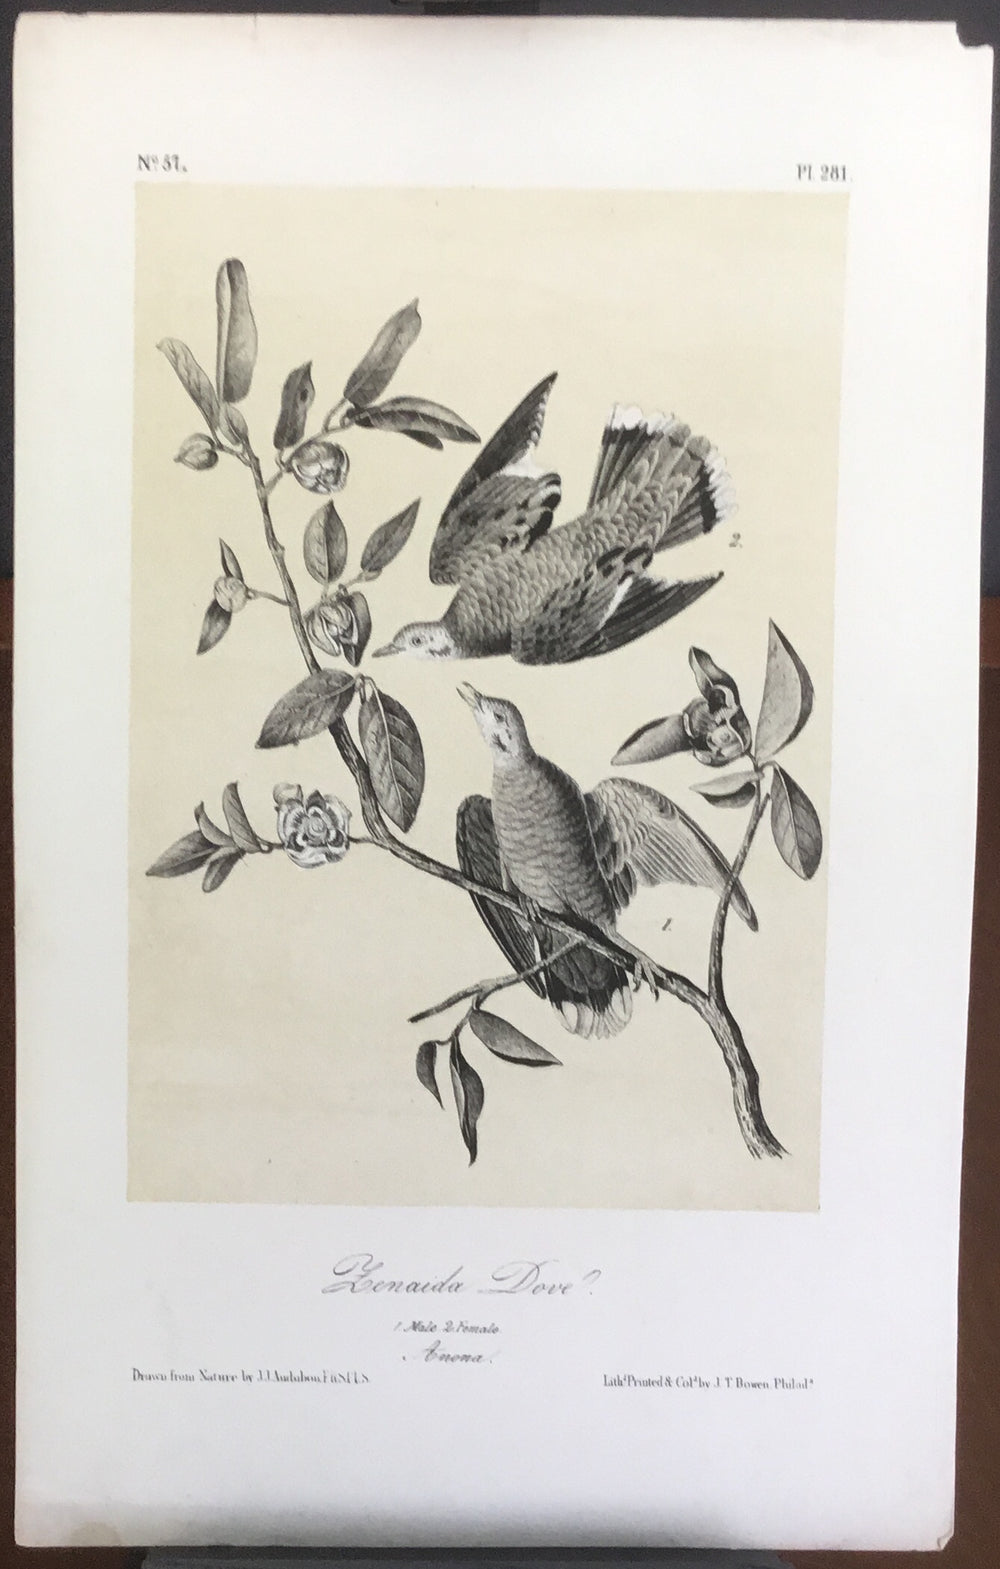 Audubon Octavo Zenaida Dove, plate 281, uncolored test sheet, 7 x 11